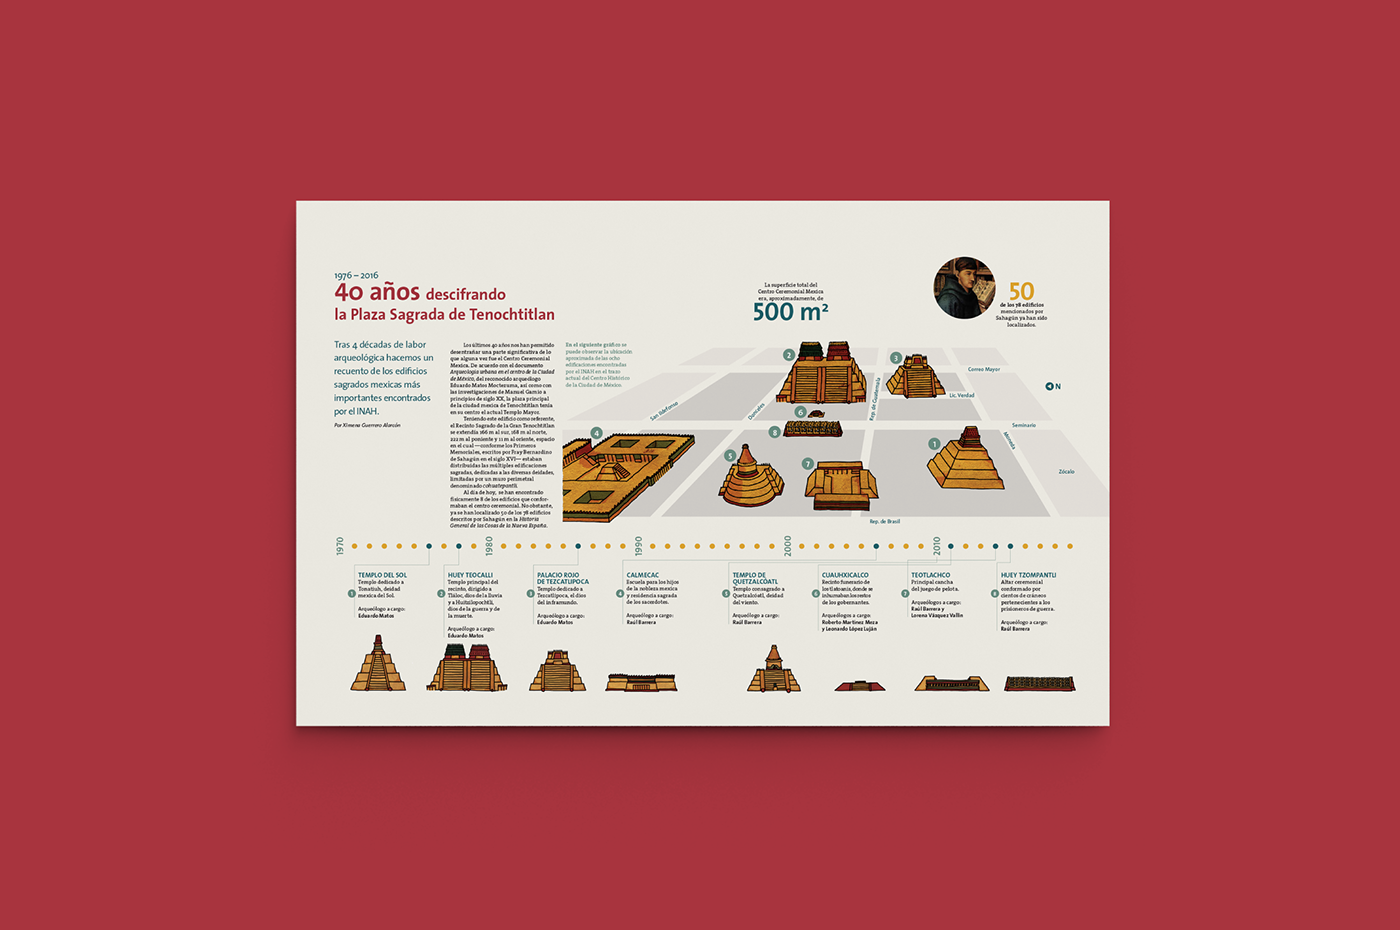 inah Tenochtitlan infografia infographics piramides mexico pyramids mexica Azteca